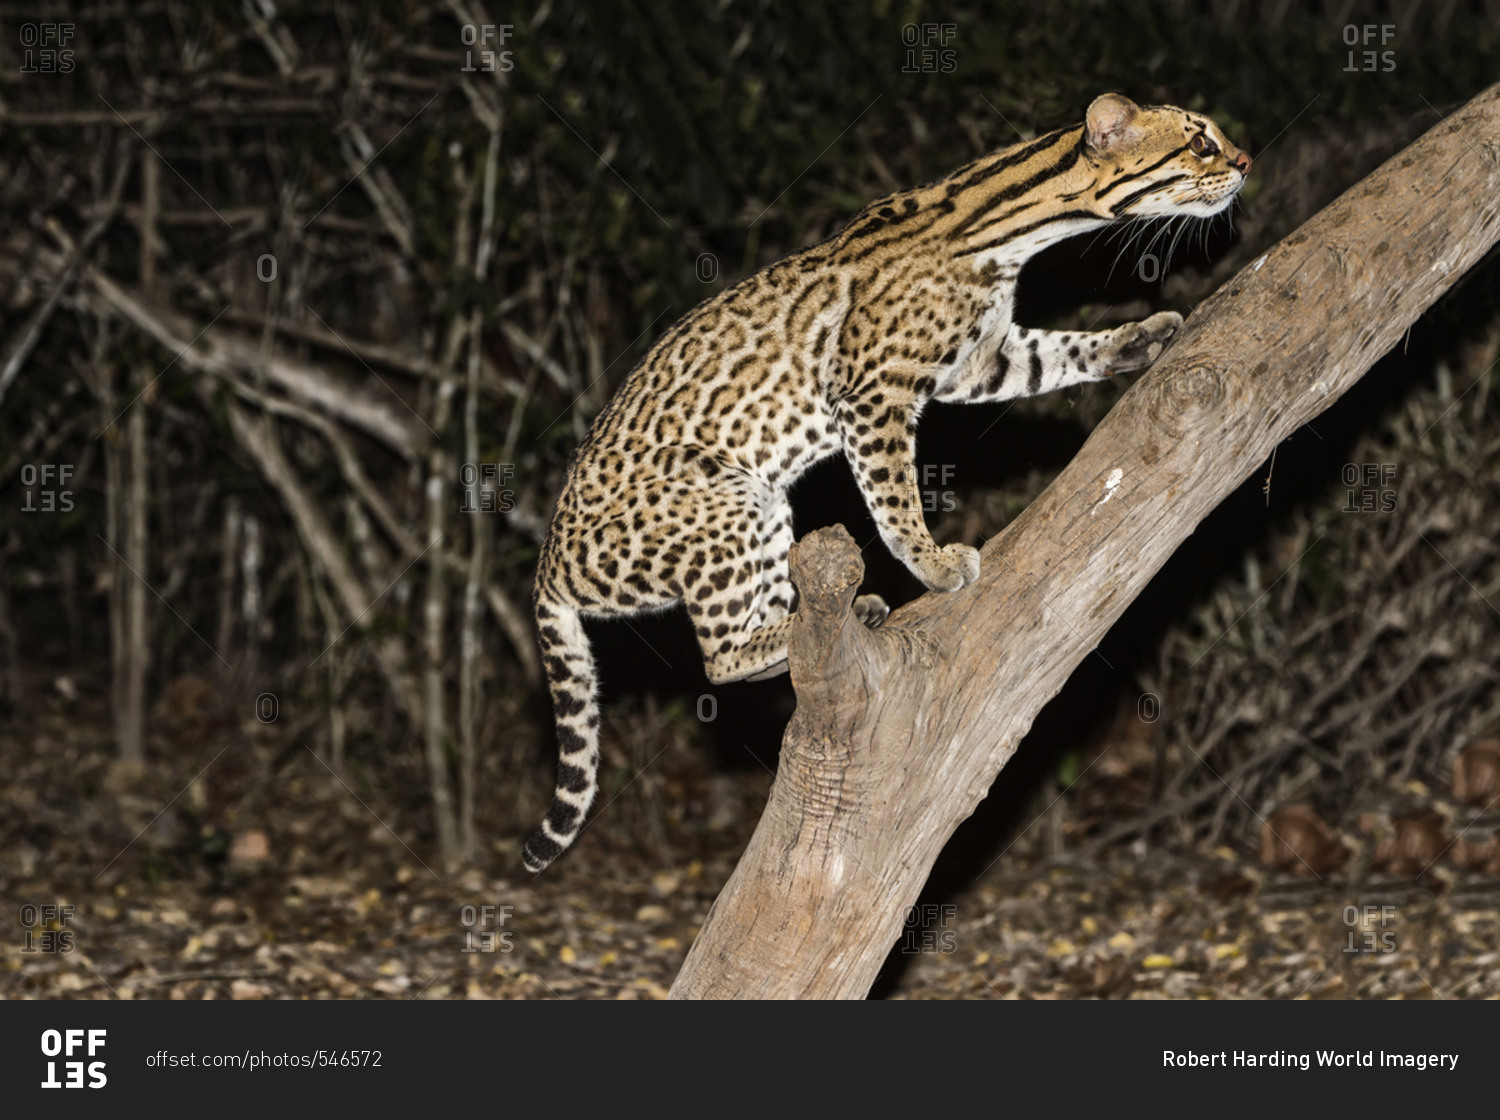 Ocelot (Leopardus pardalis) at night, Pantanal, Mato Grosso, Brazil, South America